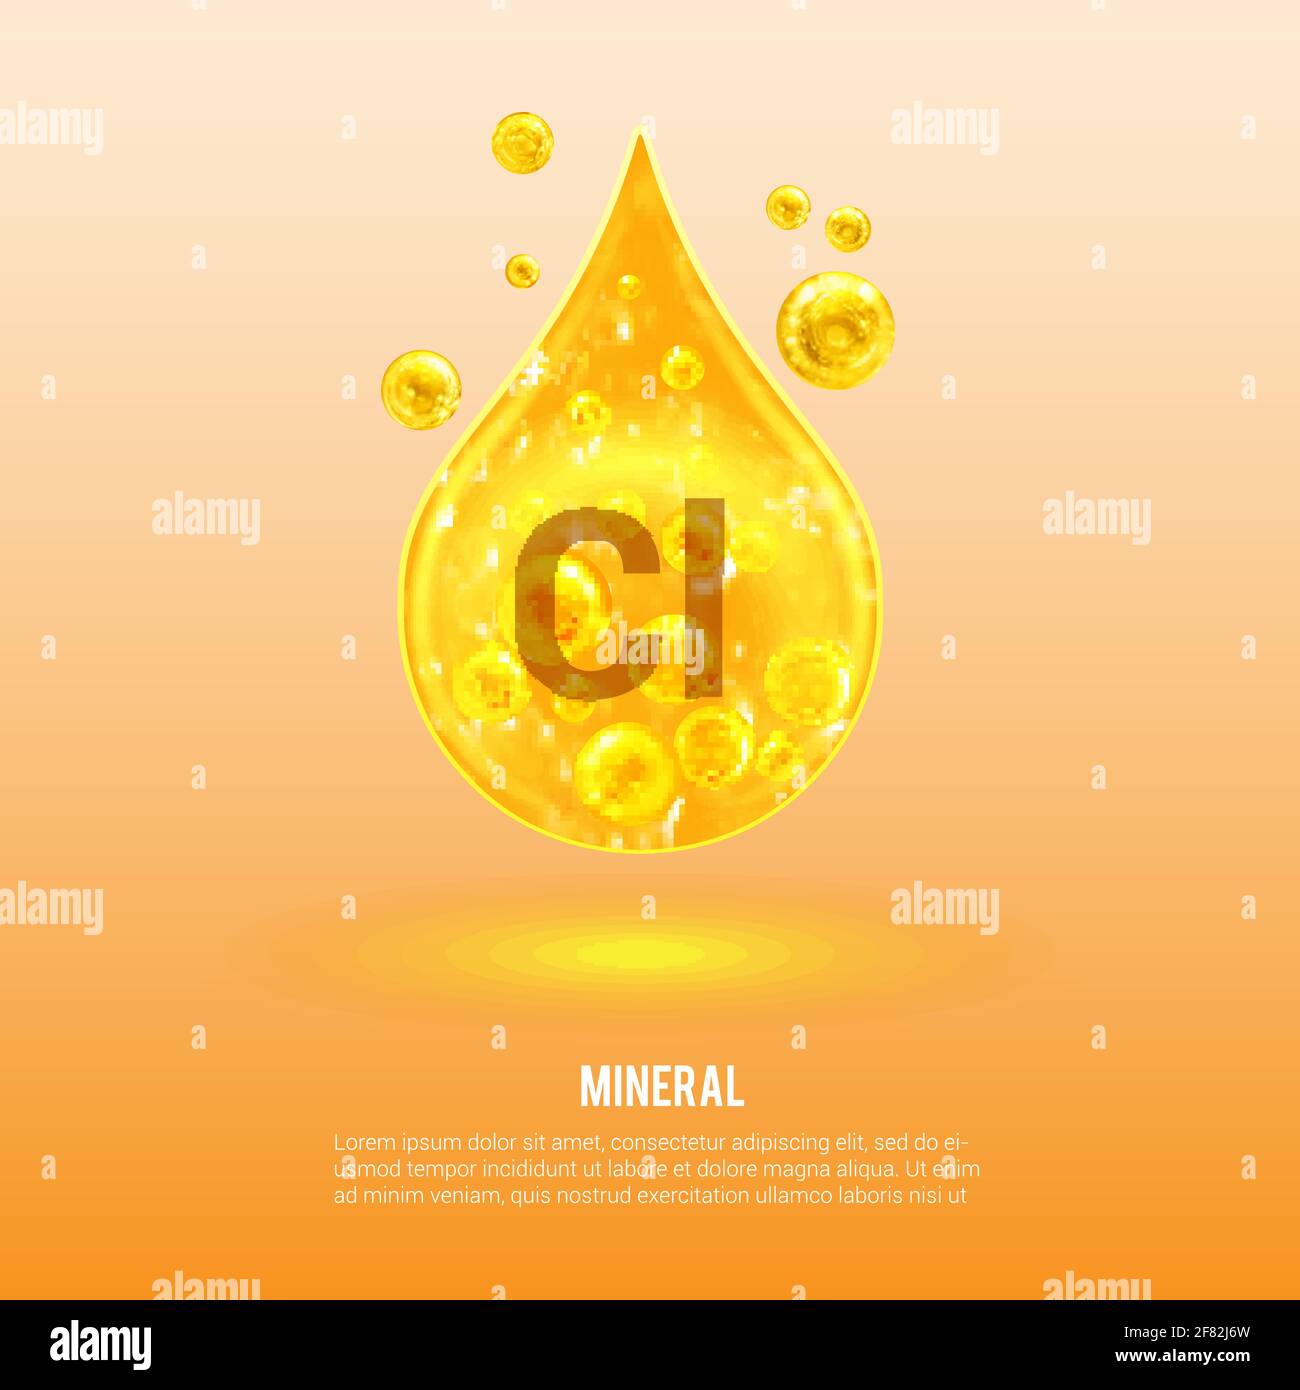 Mineralöl Kl. Chlor. Mineralvitaminkomplex. Goldener Tropfen und goldene Kugeln. Gesundheitskonzept. Cl Chlor. Stock Vektor